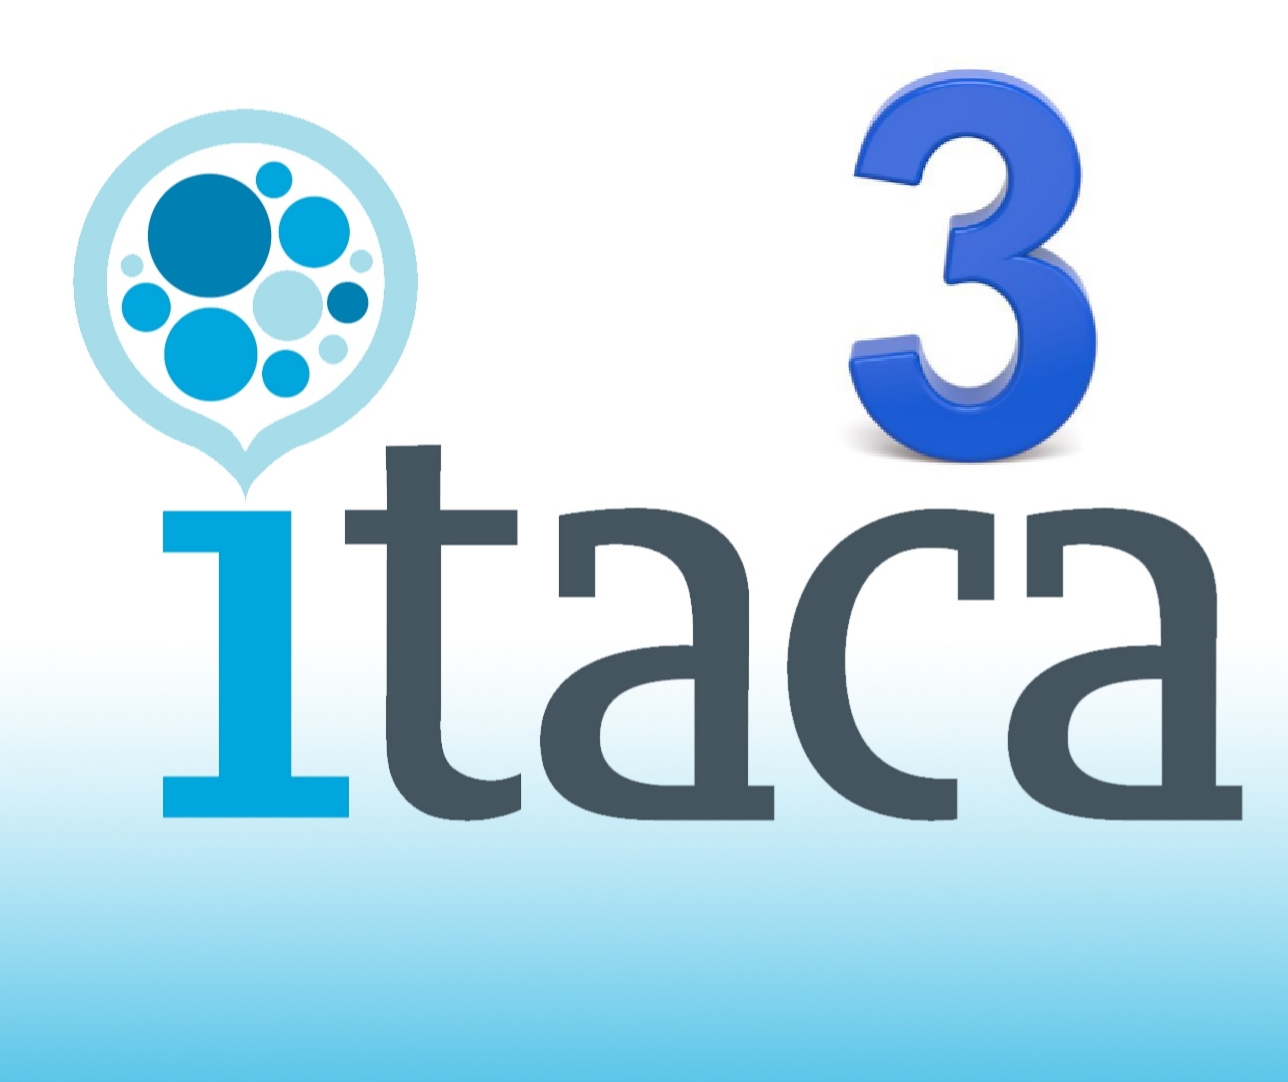 ITACA 3